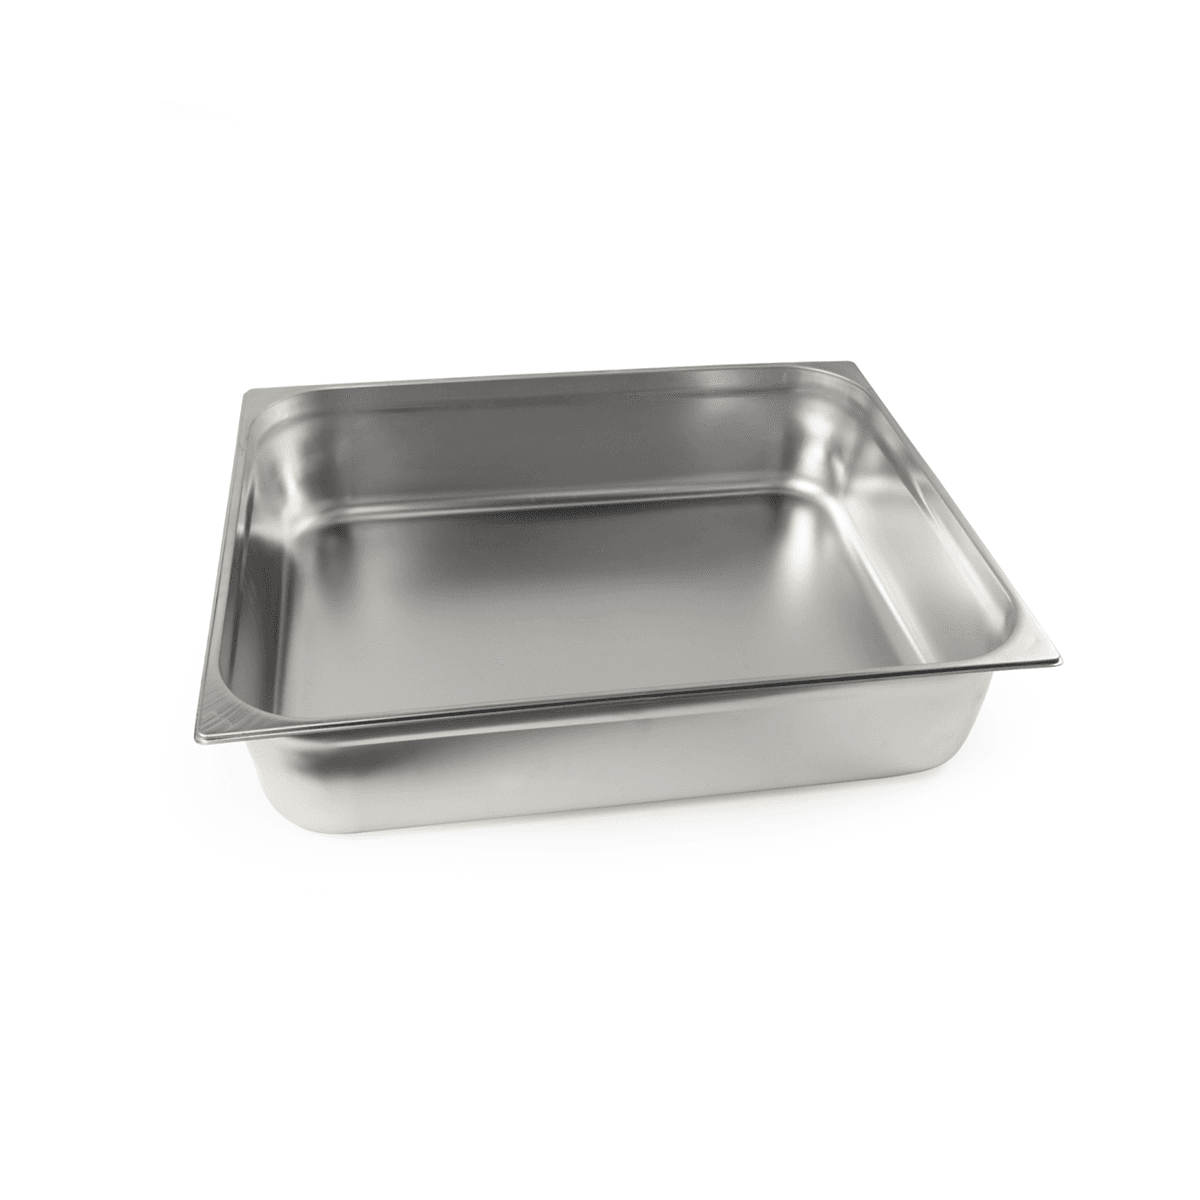 حافظة طعام معدن قياس GN 2/1 وعمق 150 مم كايلر Kayalar Stainless Steel Gastronorm Container